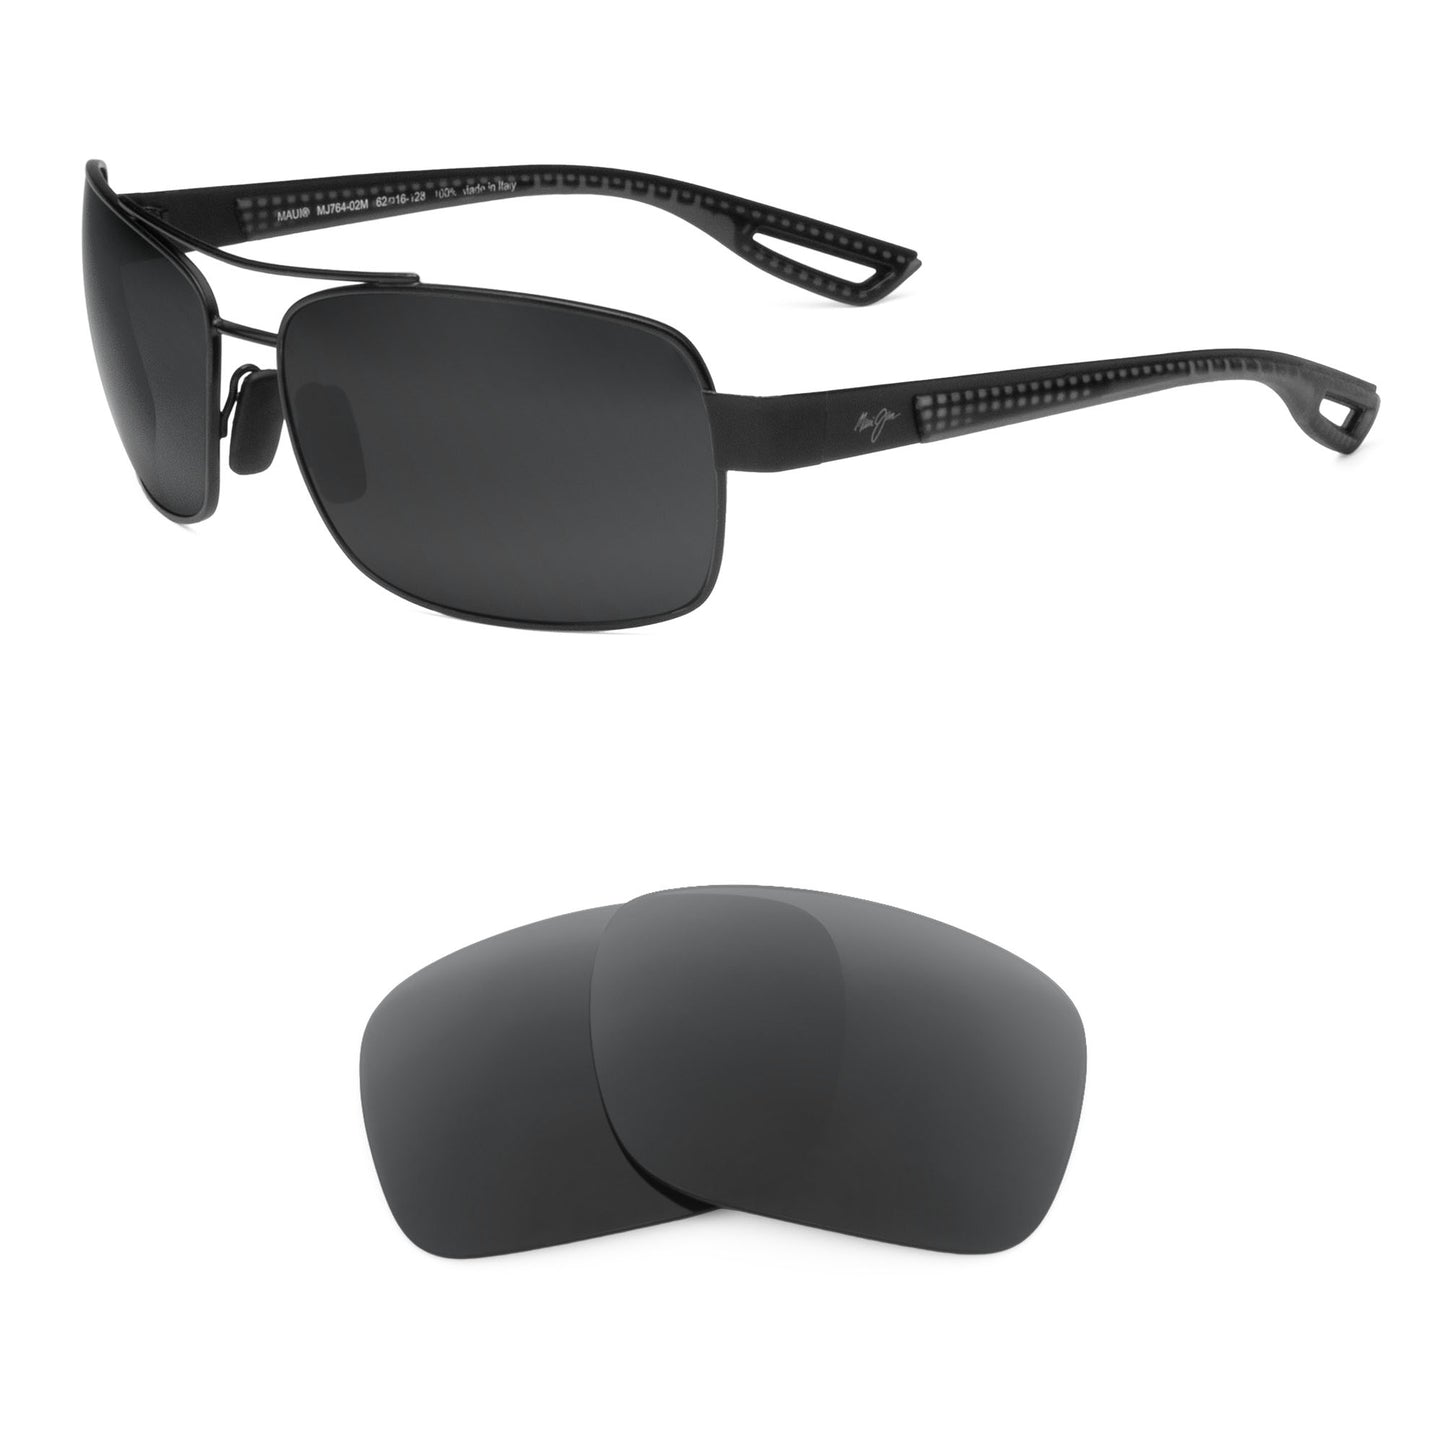 Maui Jim Ola MJ764 sunglasses with replacement lenses